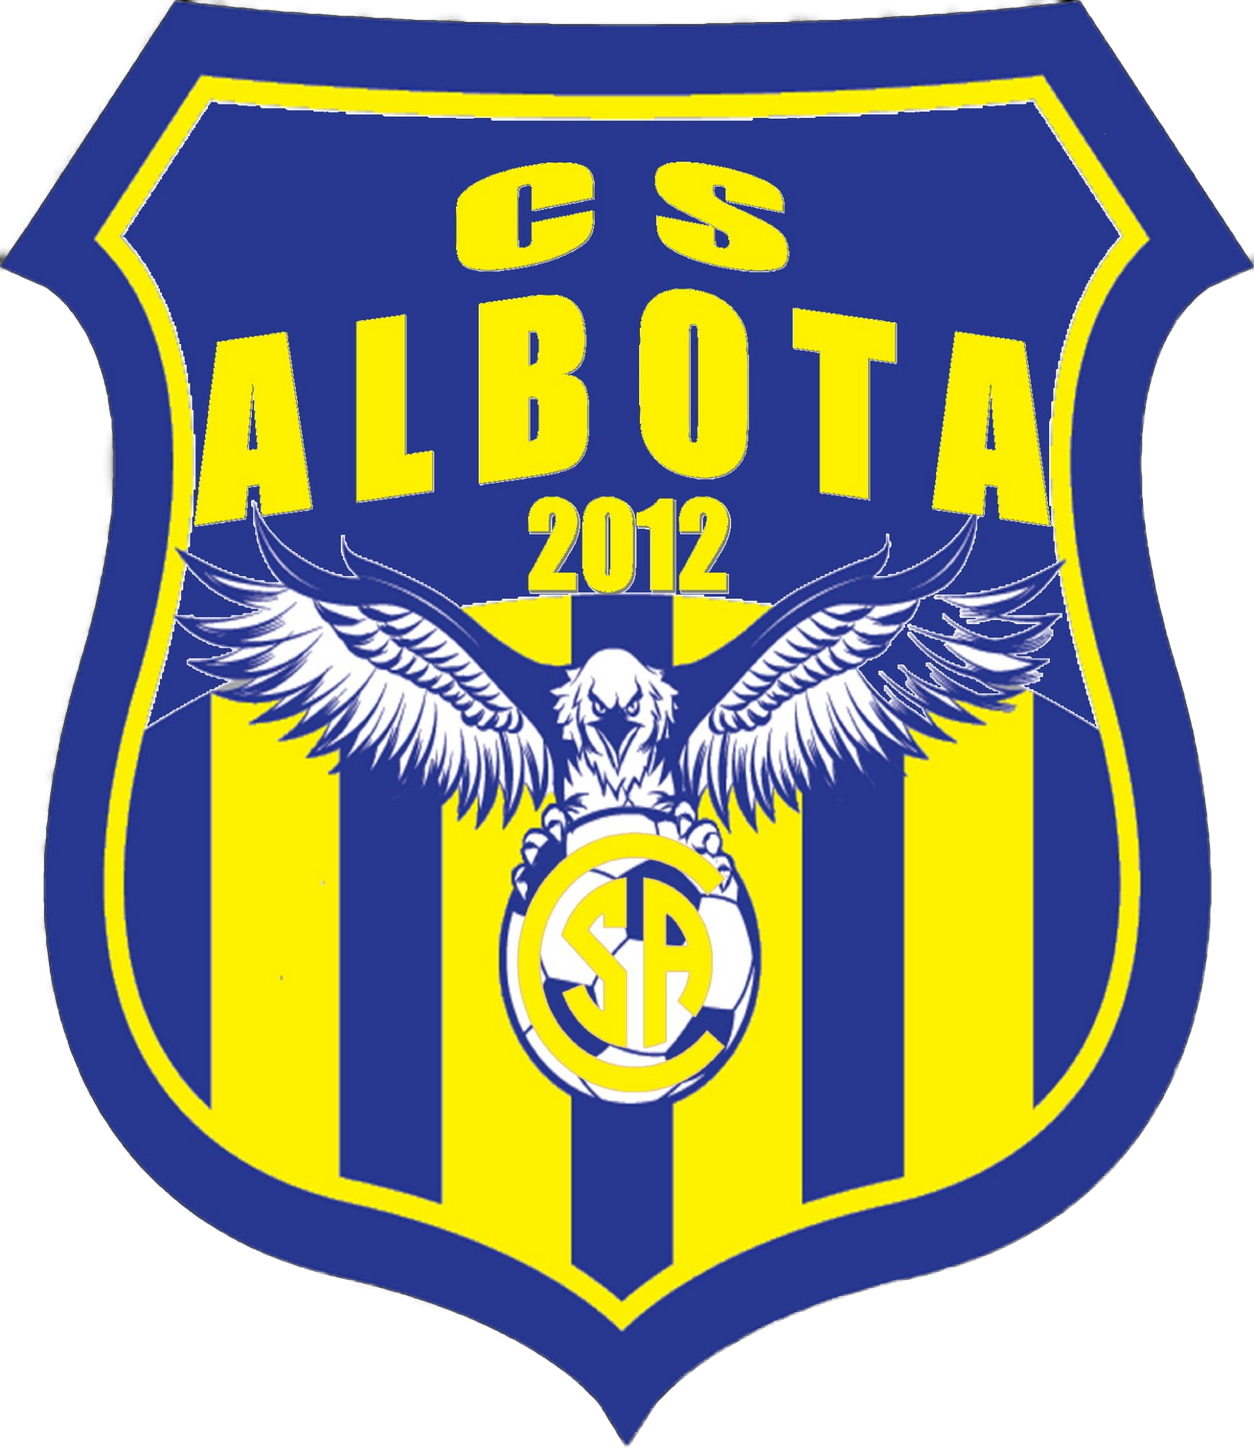 Wappen CS Albota 2012  129076